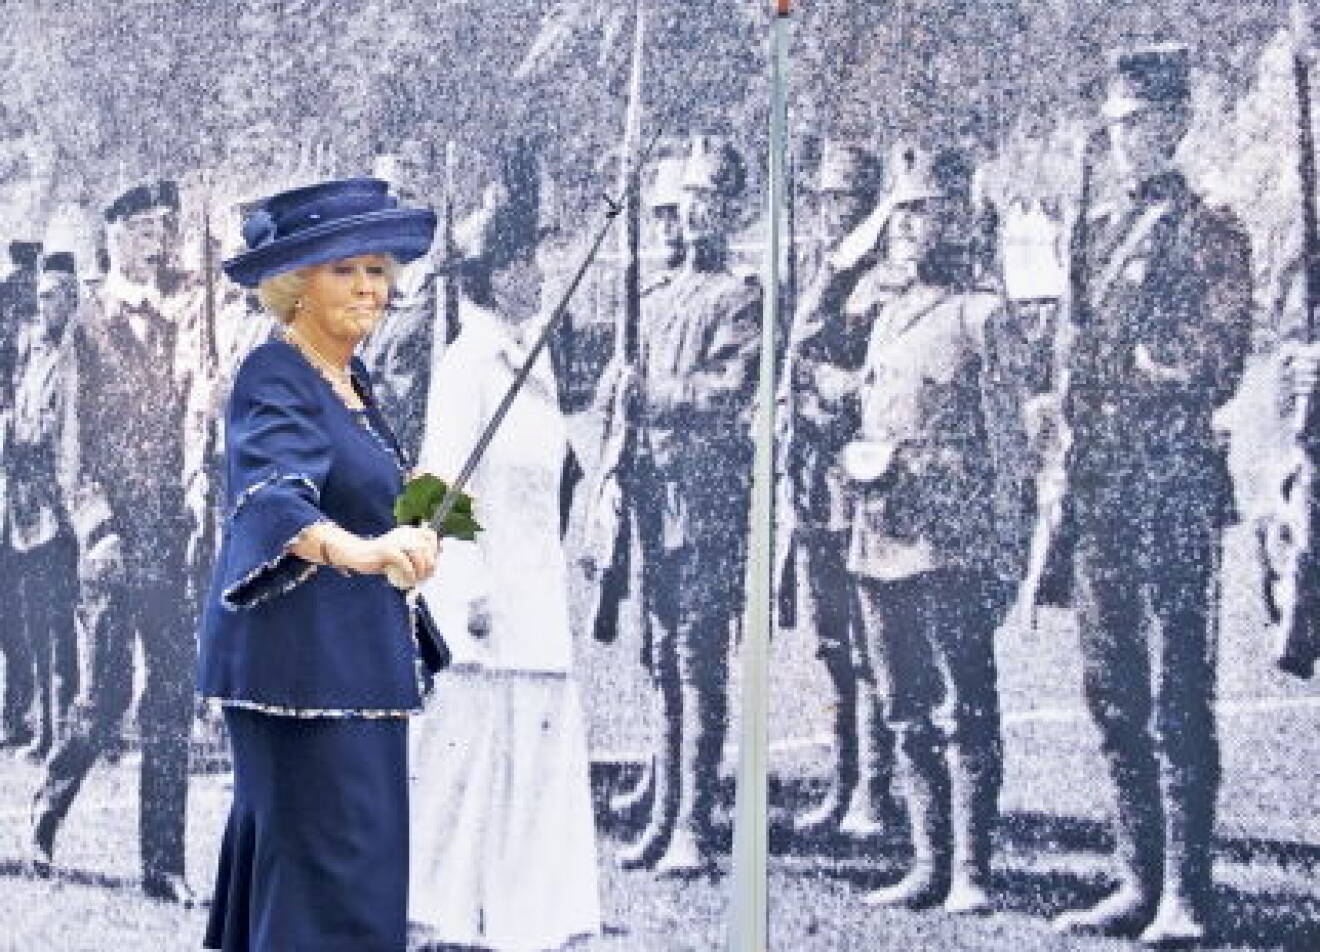 Princess Beatrix opens Pavilion Netherlands and the First World War